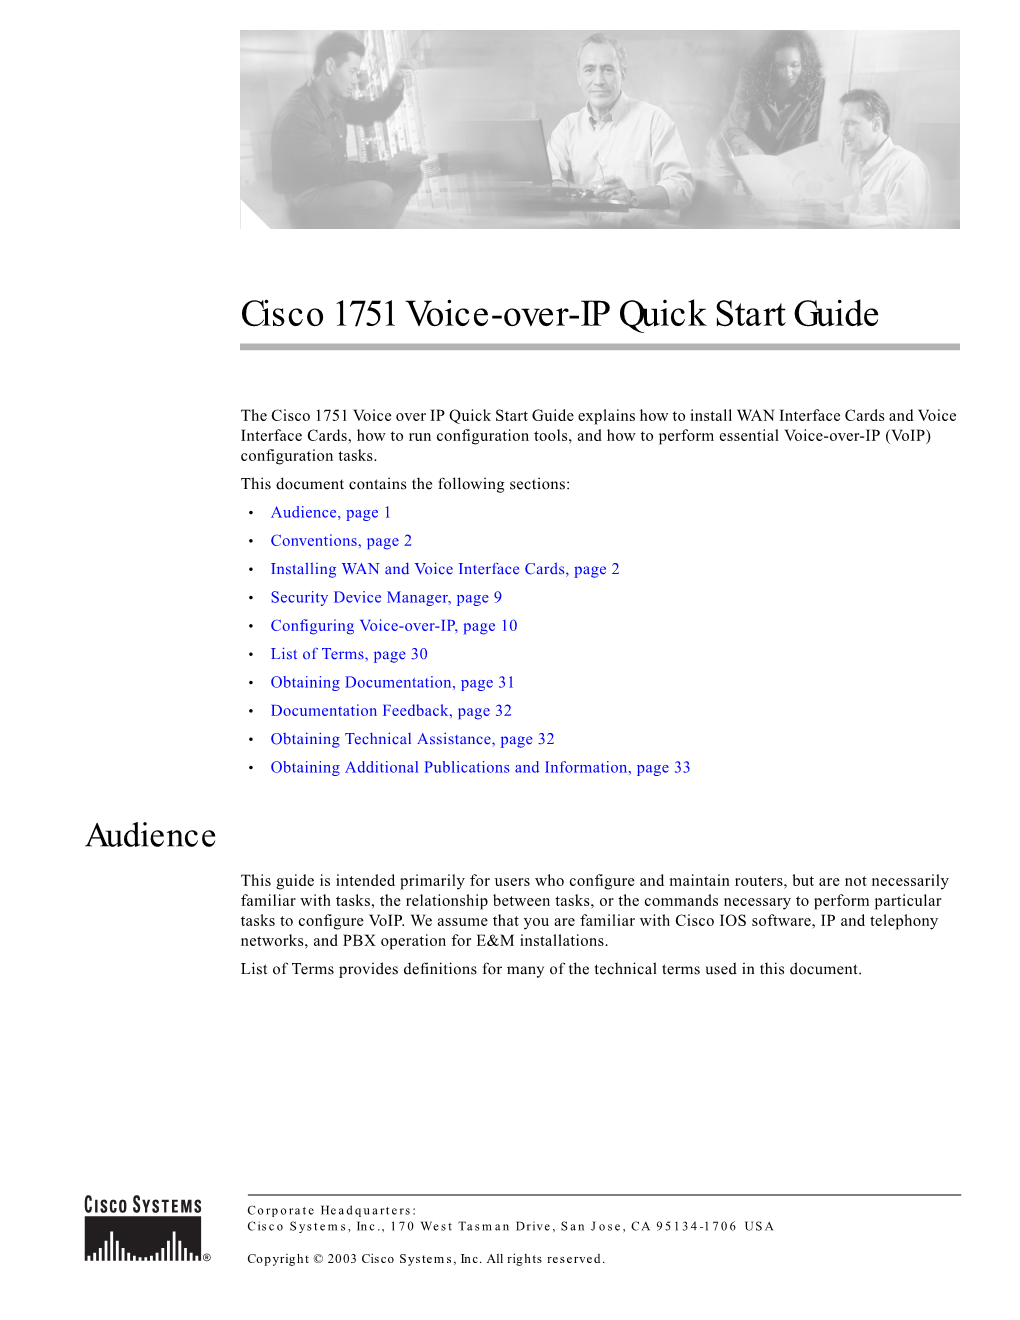 Cisco 1751 Voice-Over-IP Quick Start Guide